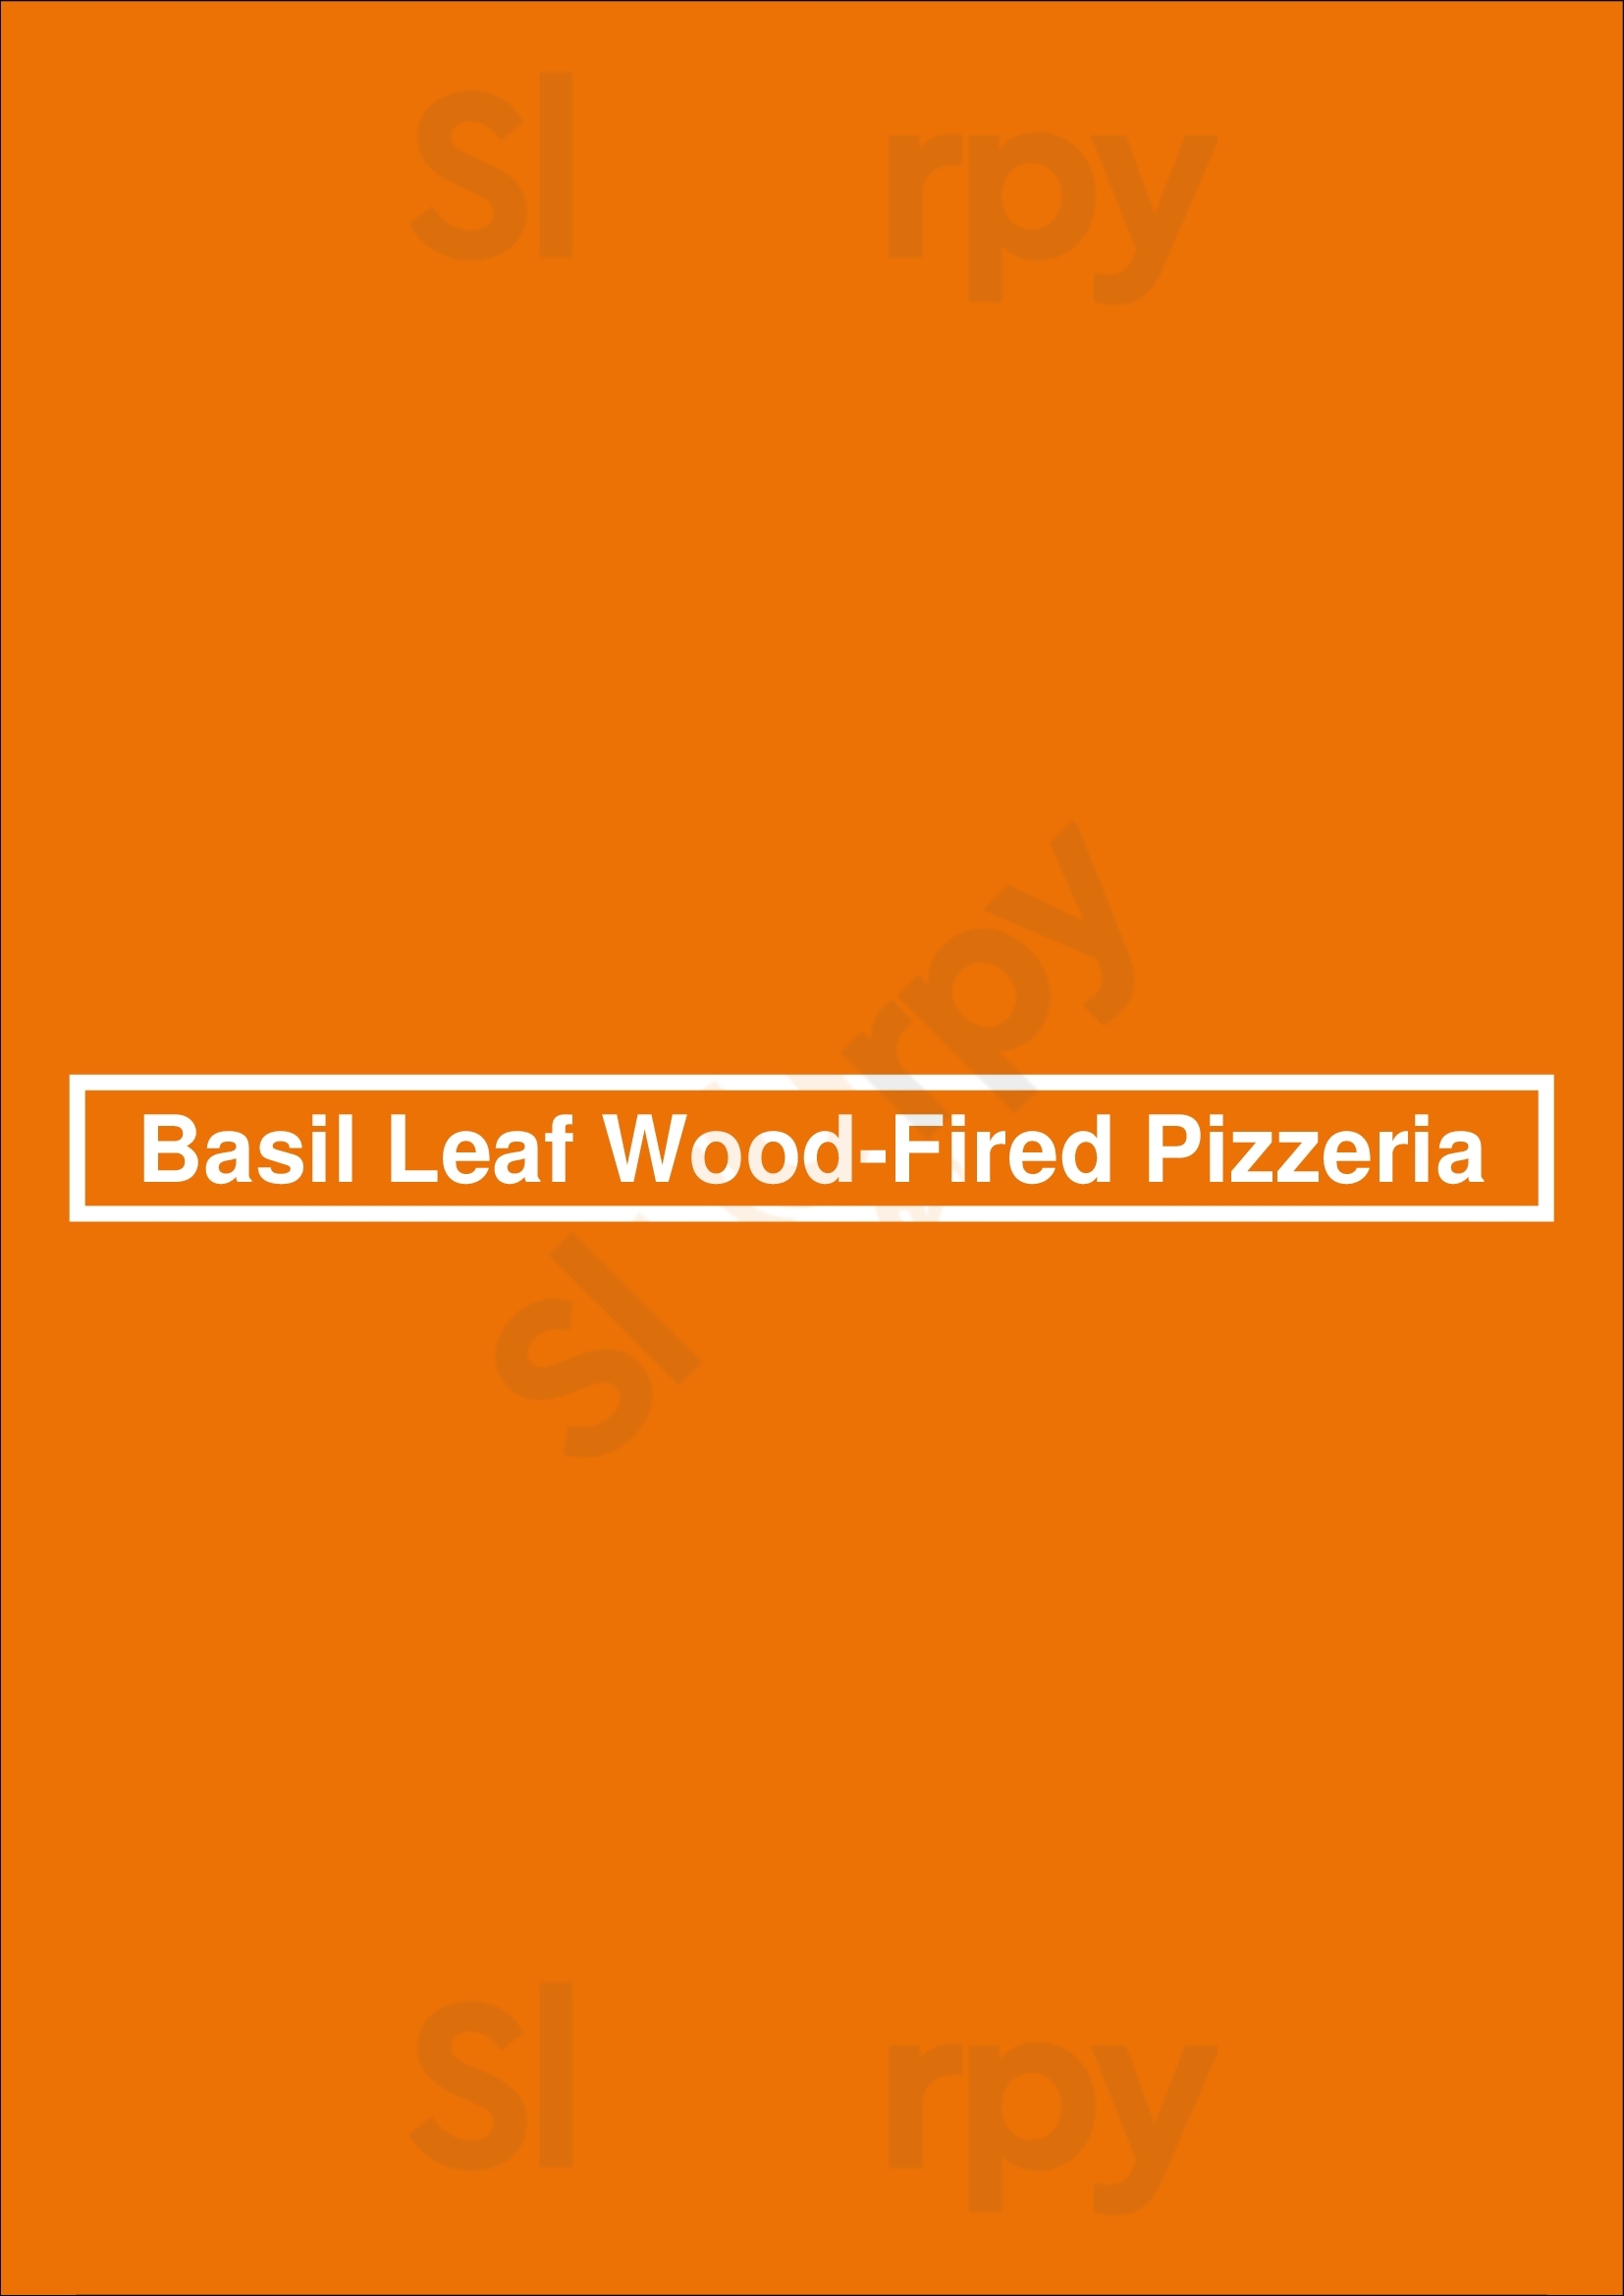 Basil Leaf Wood-fired Pizzeria London Menu - 1